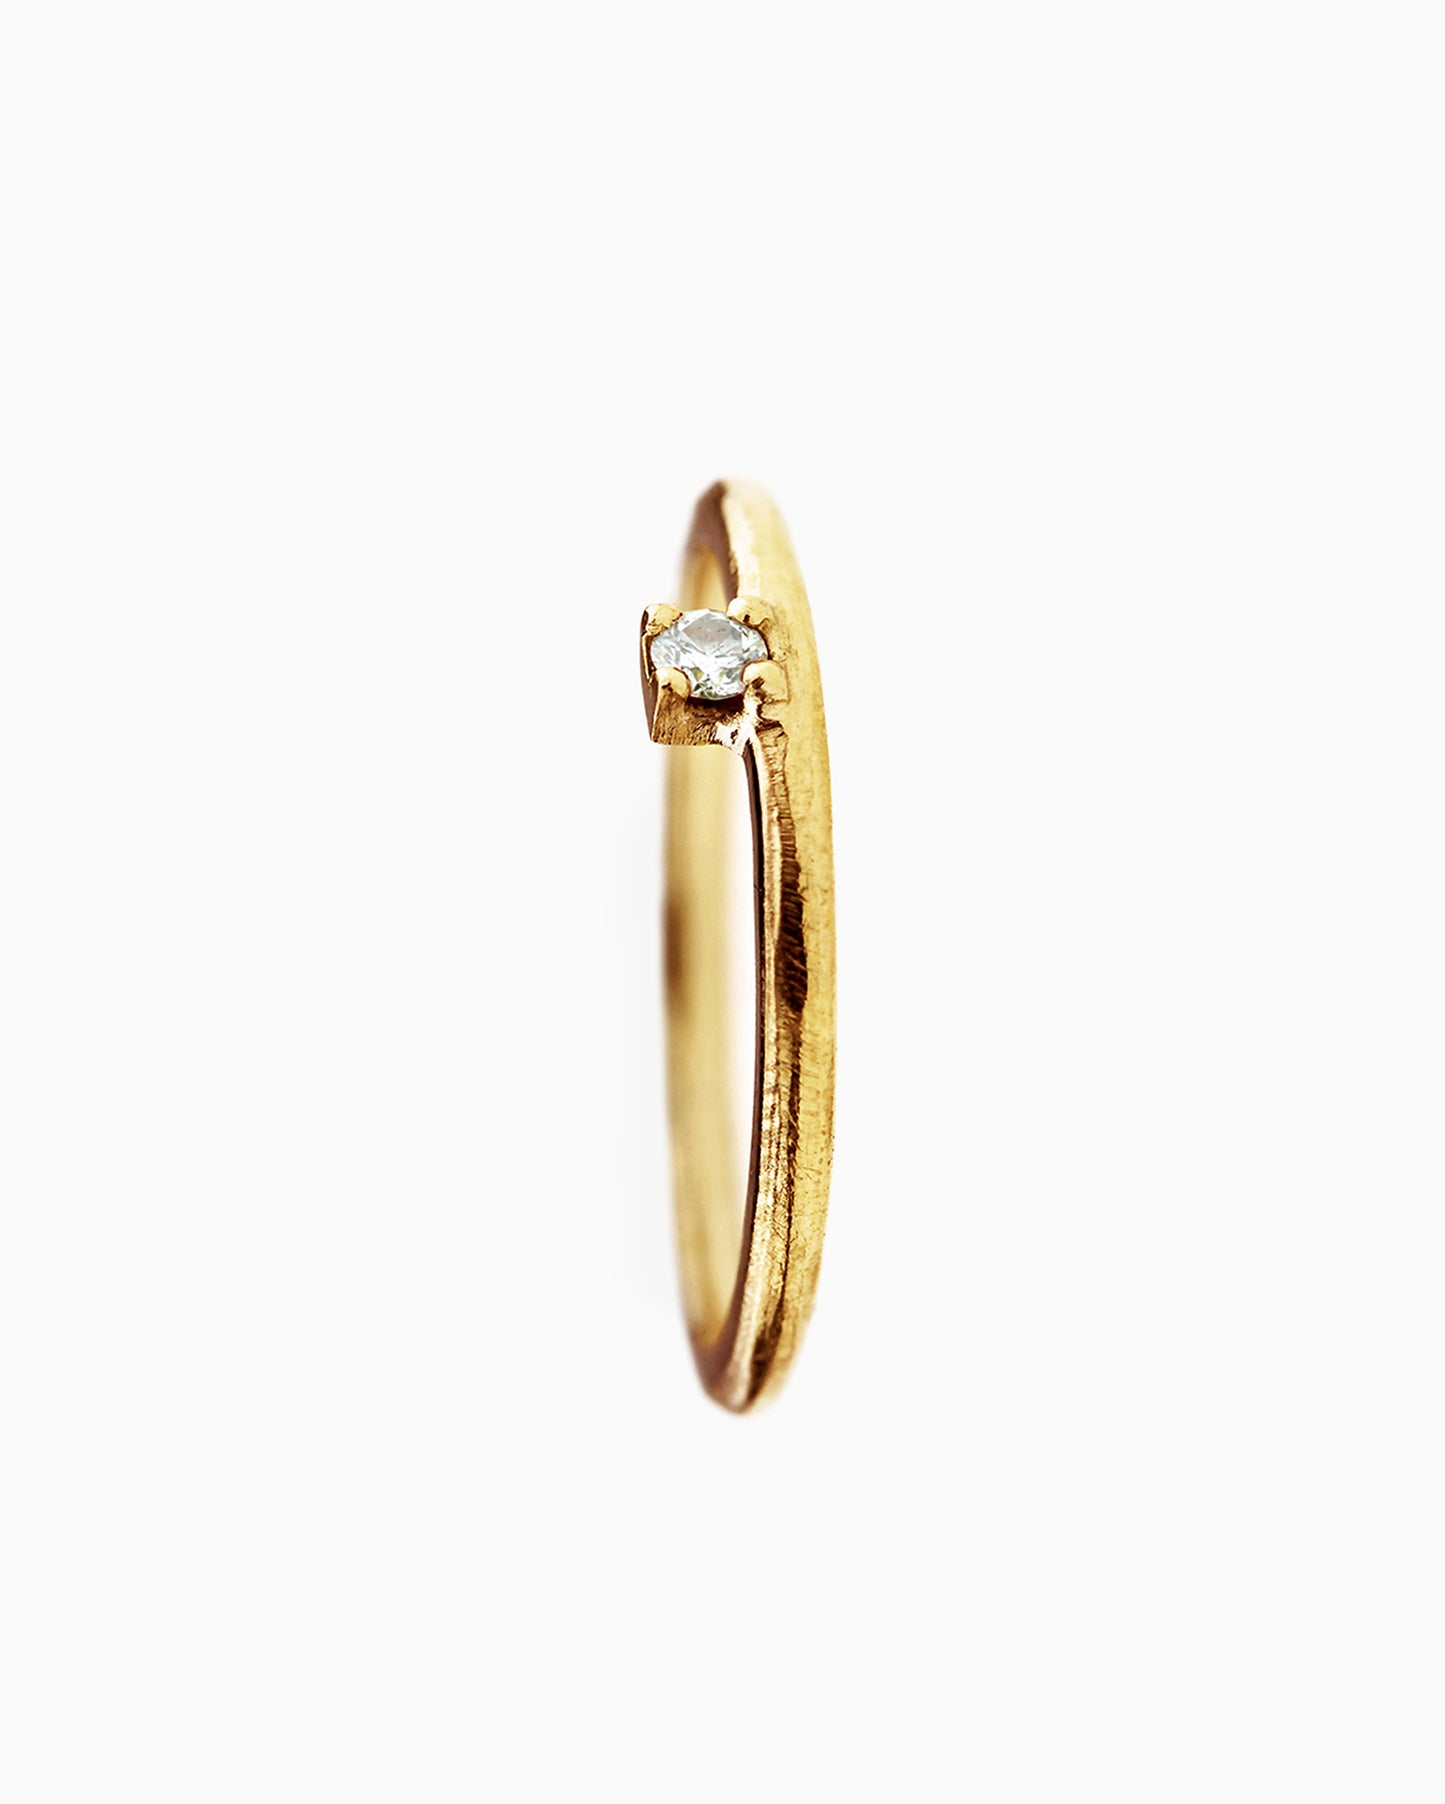 18k fijne fairmined gouden ring met klein wit diamantje